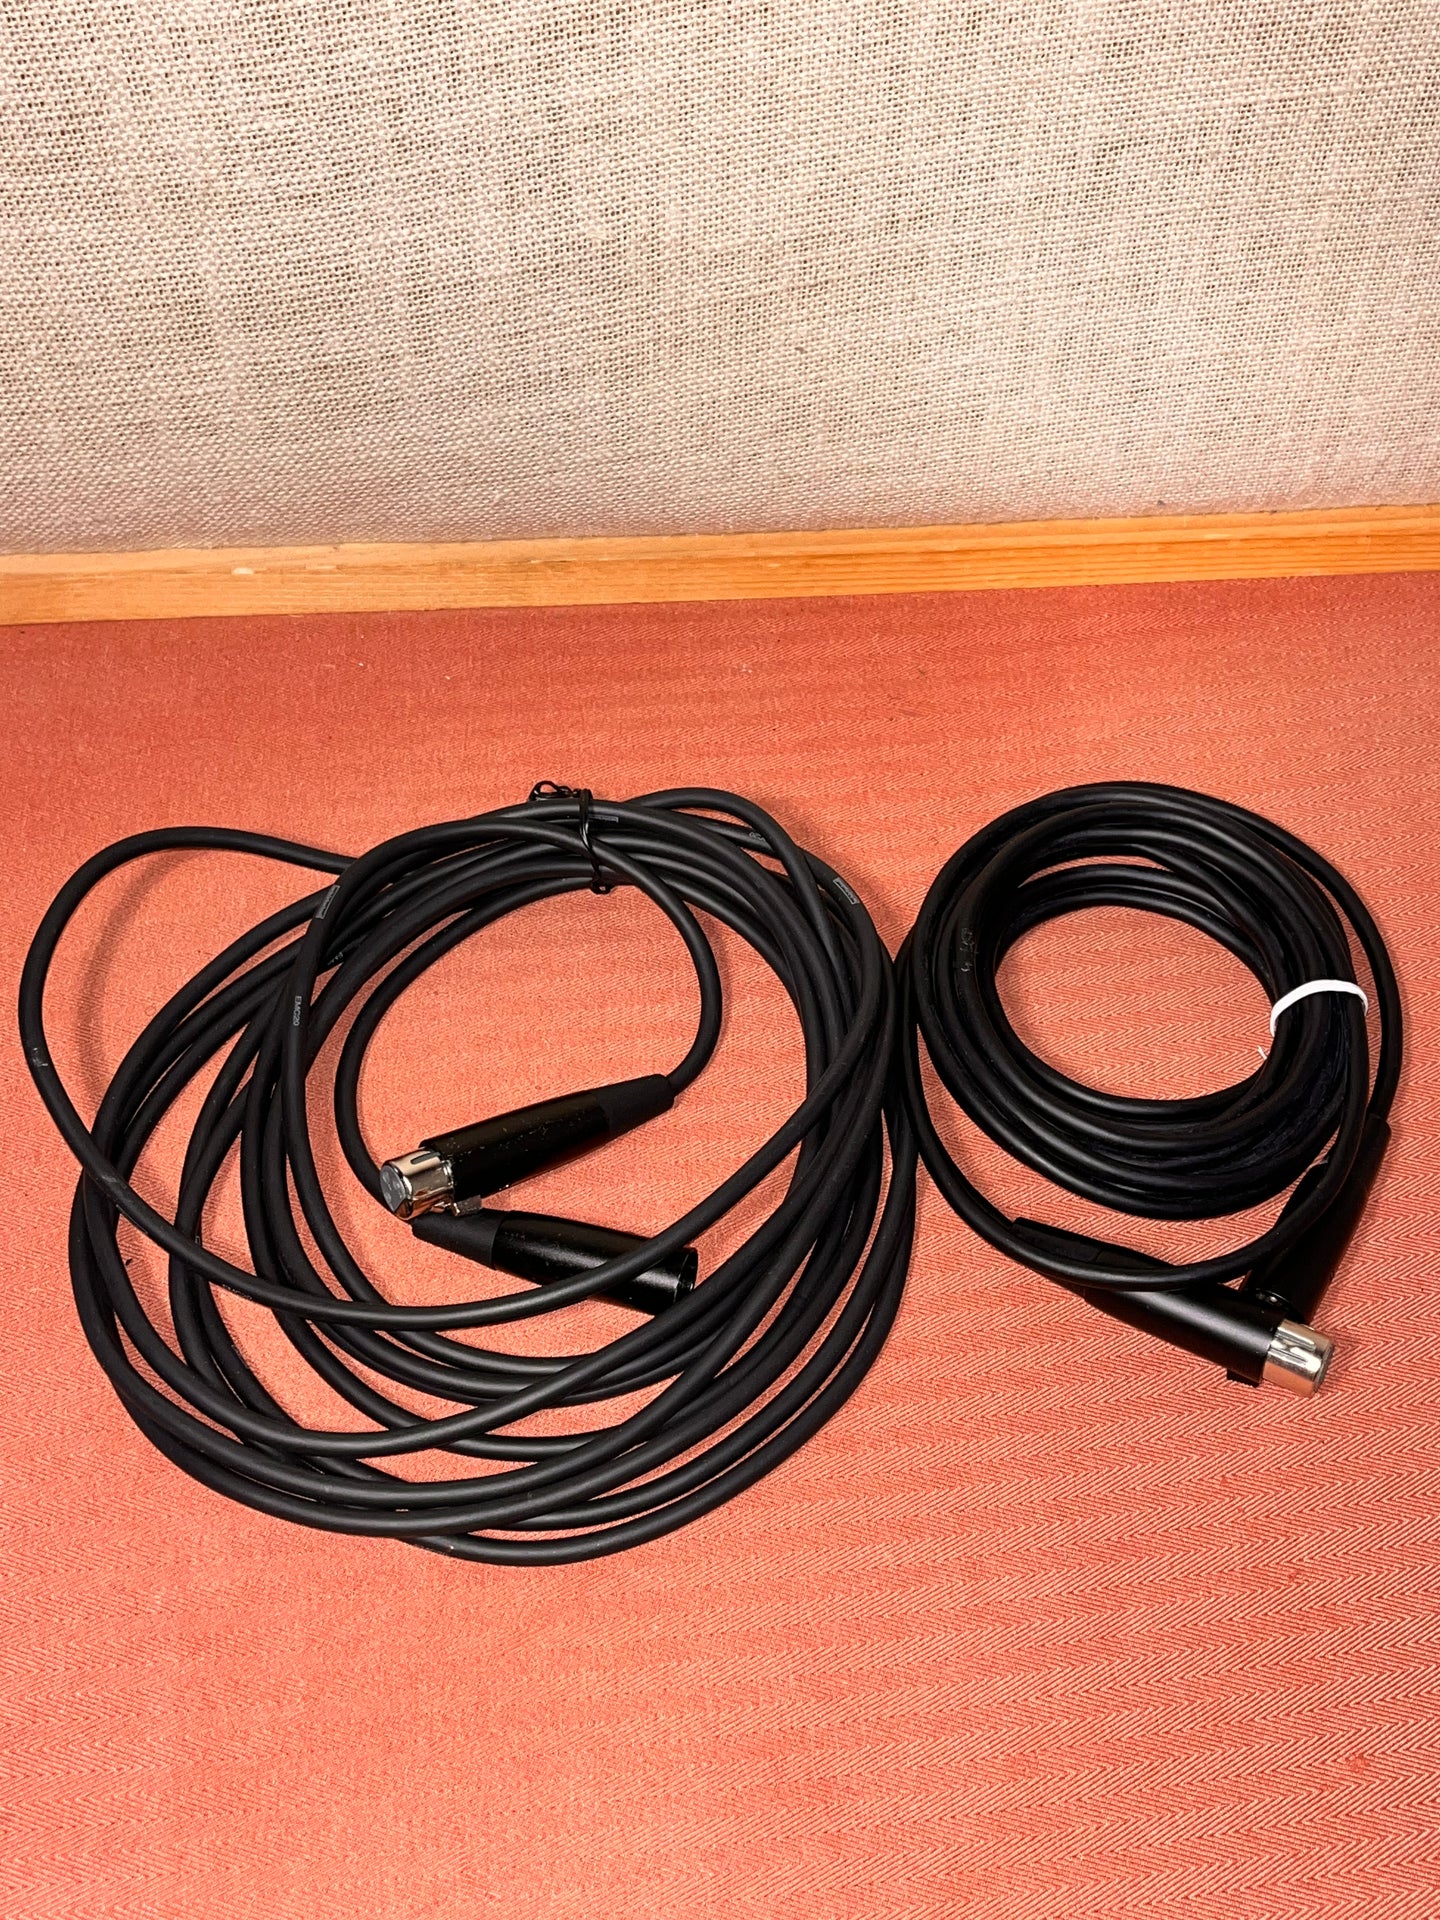 XLR Cables (2)